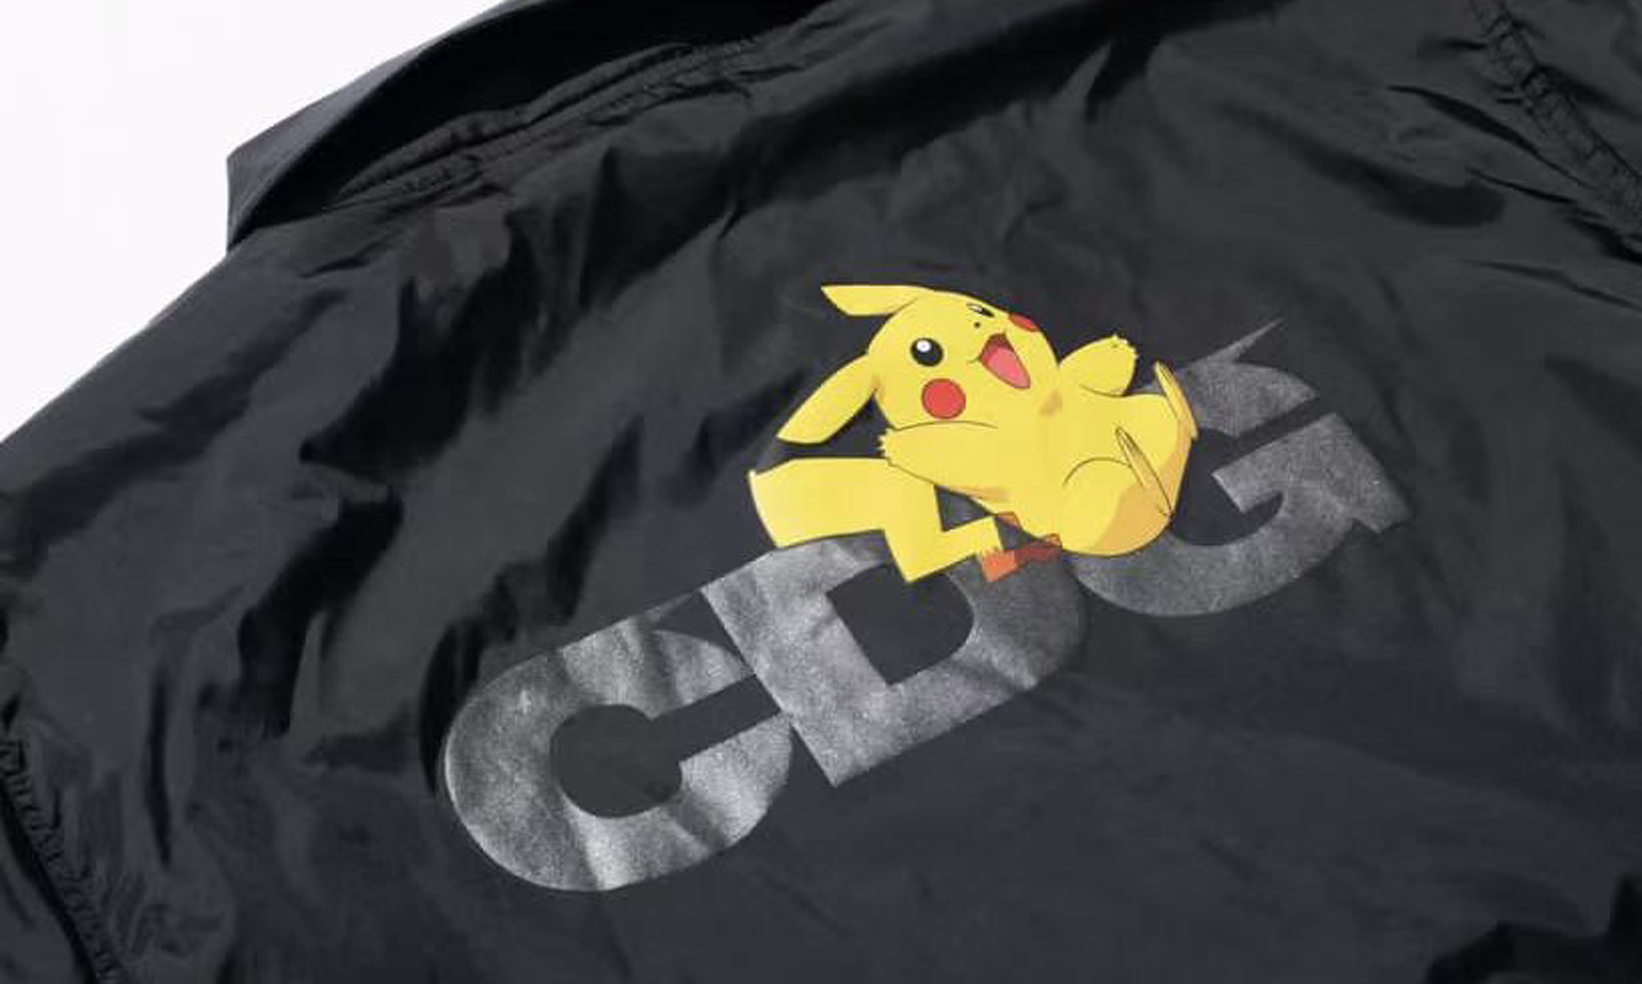 Pokémon x CDG 联名系列即将发布